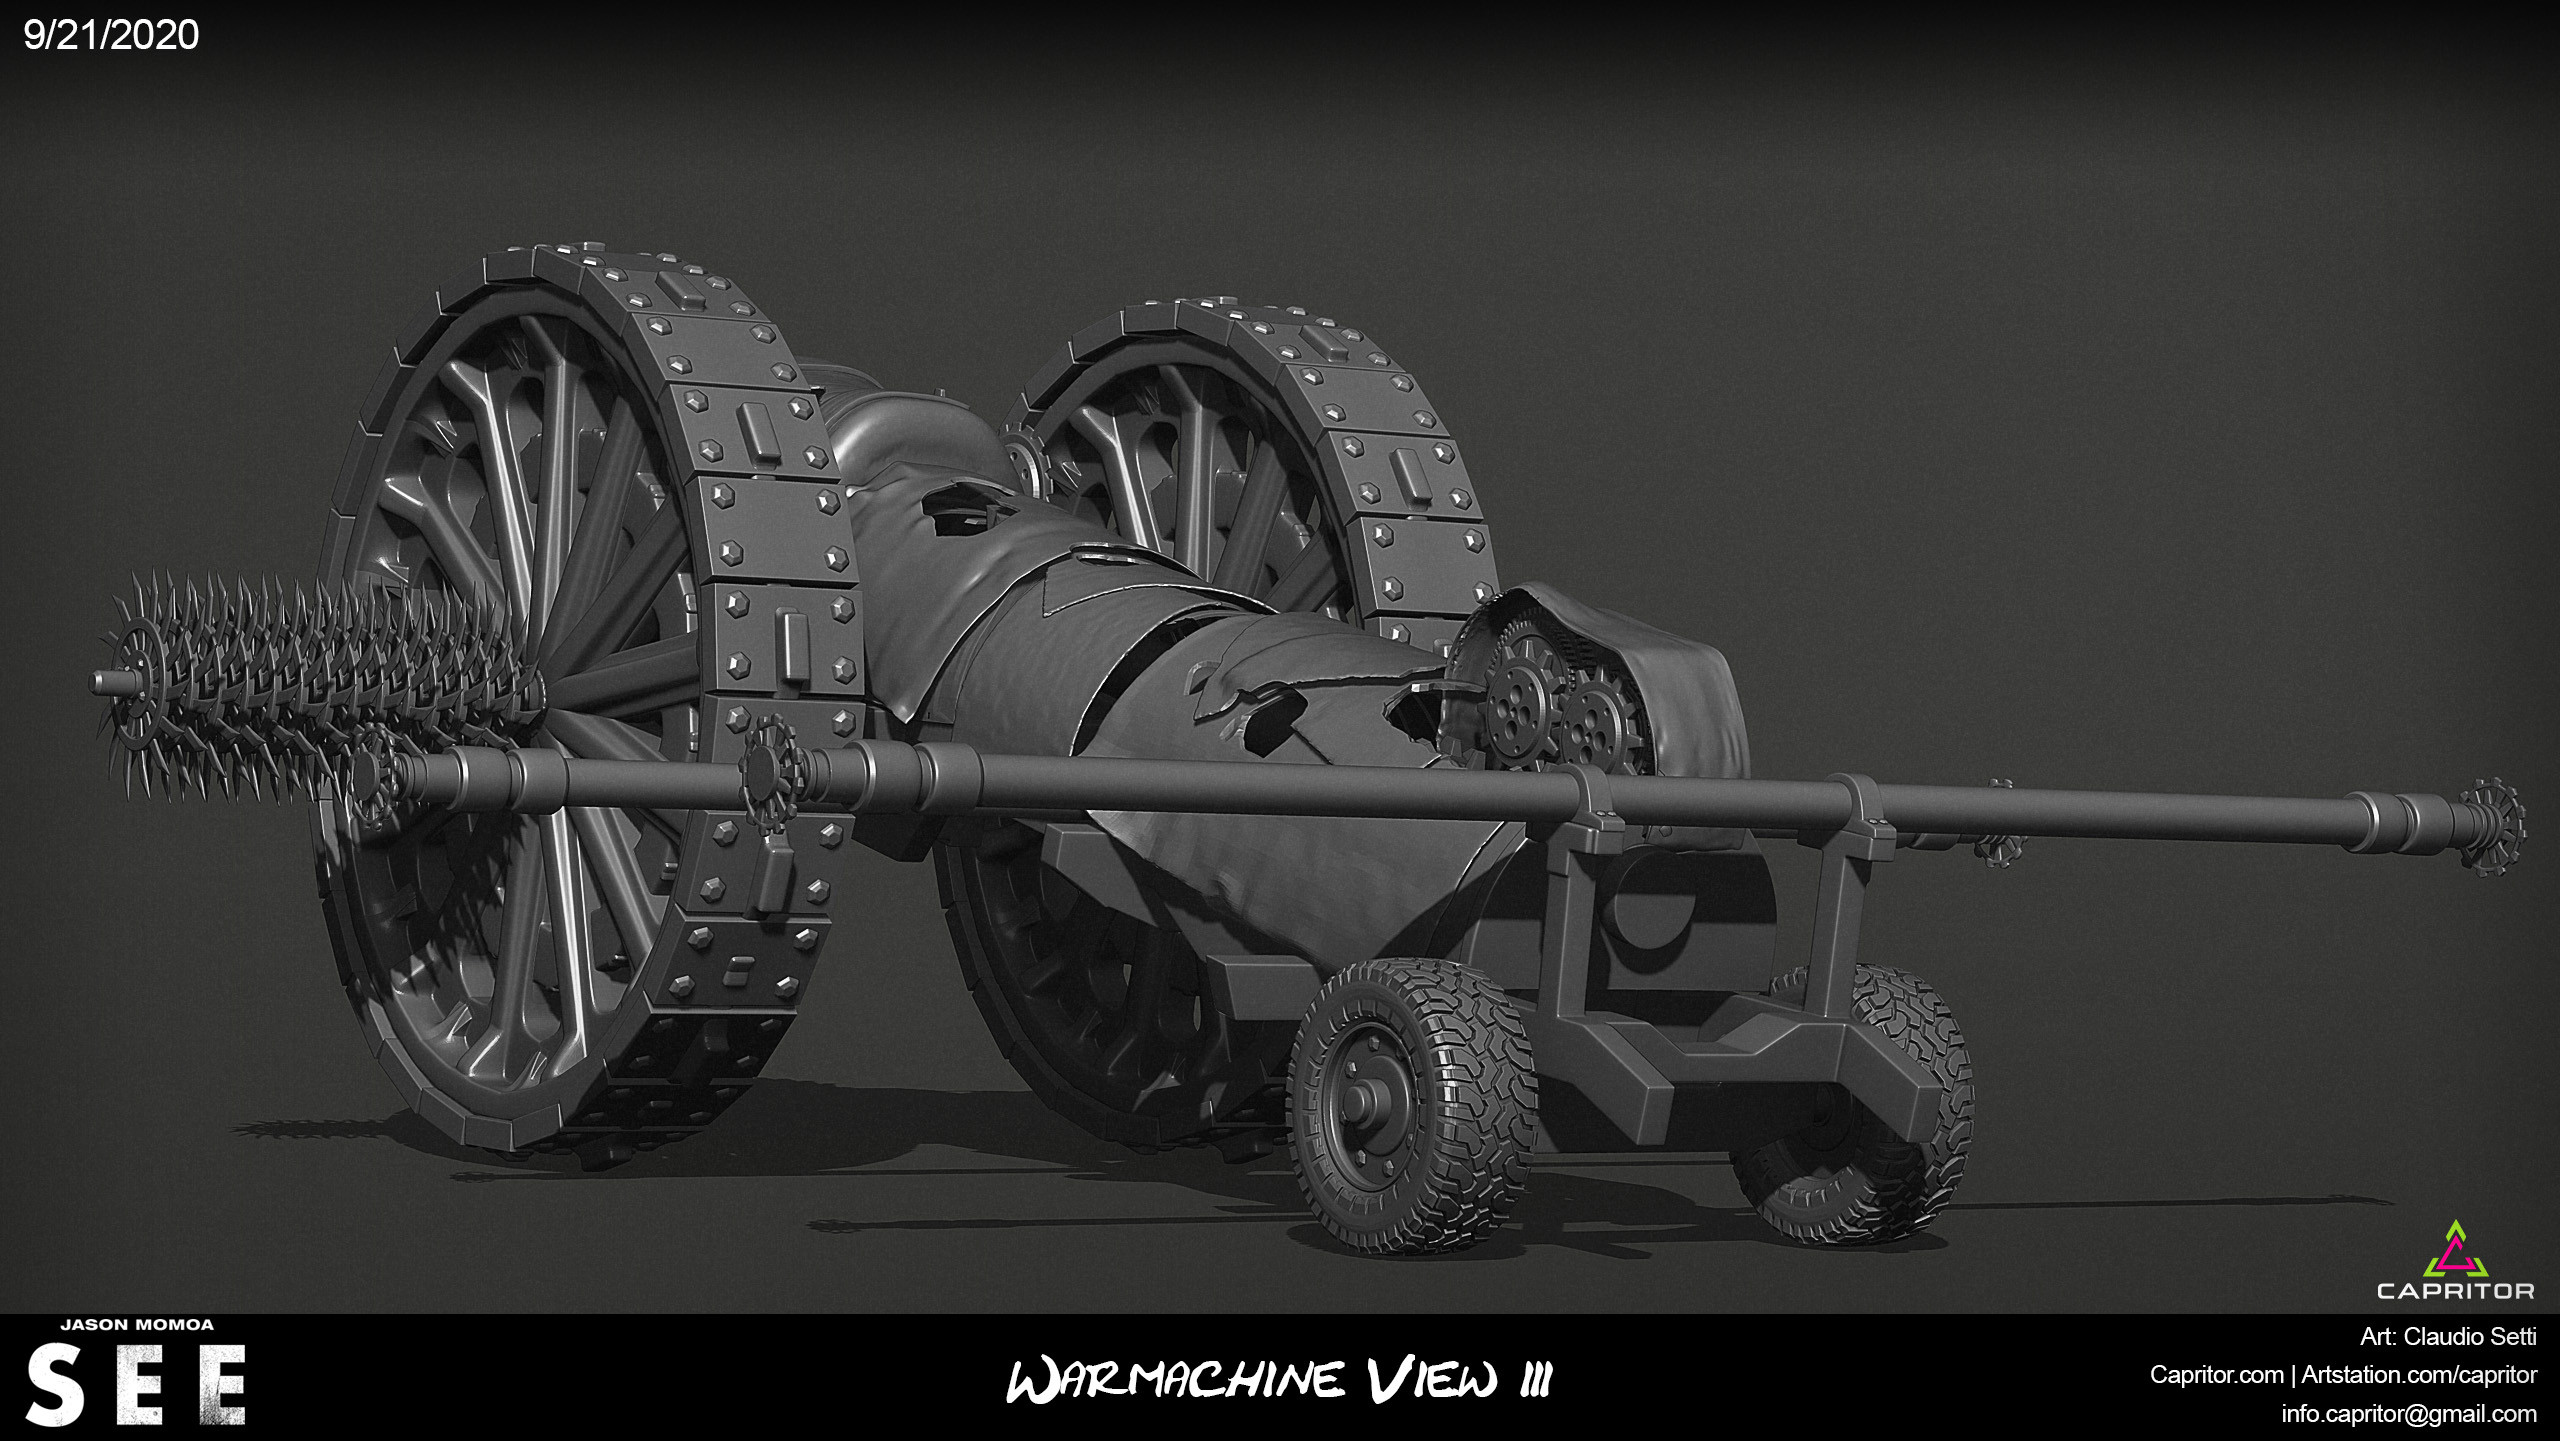 Jason Momoa - SEE - Warmachine Concept Design View 3